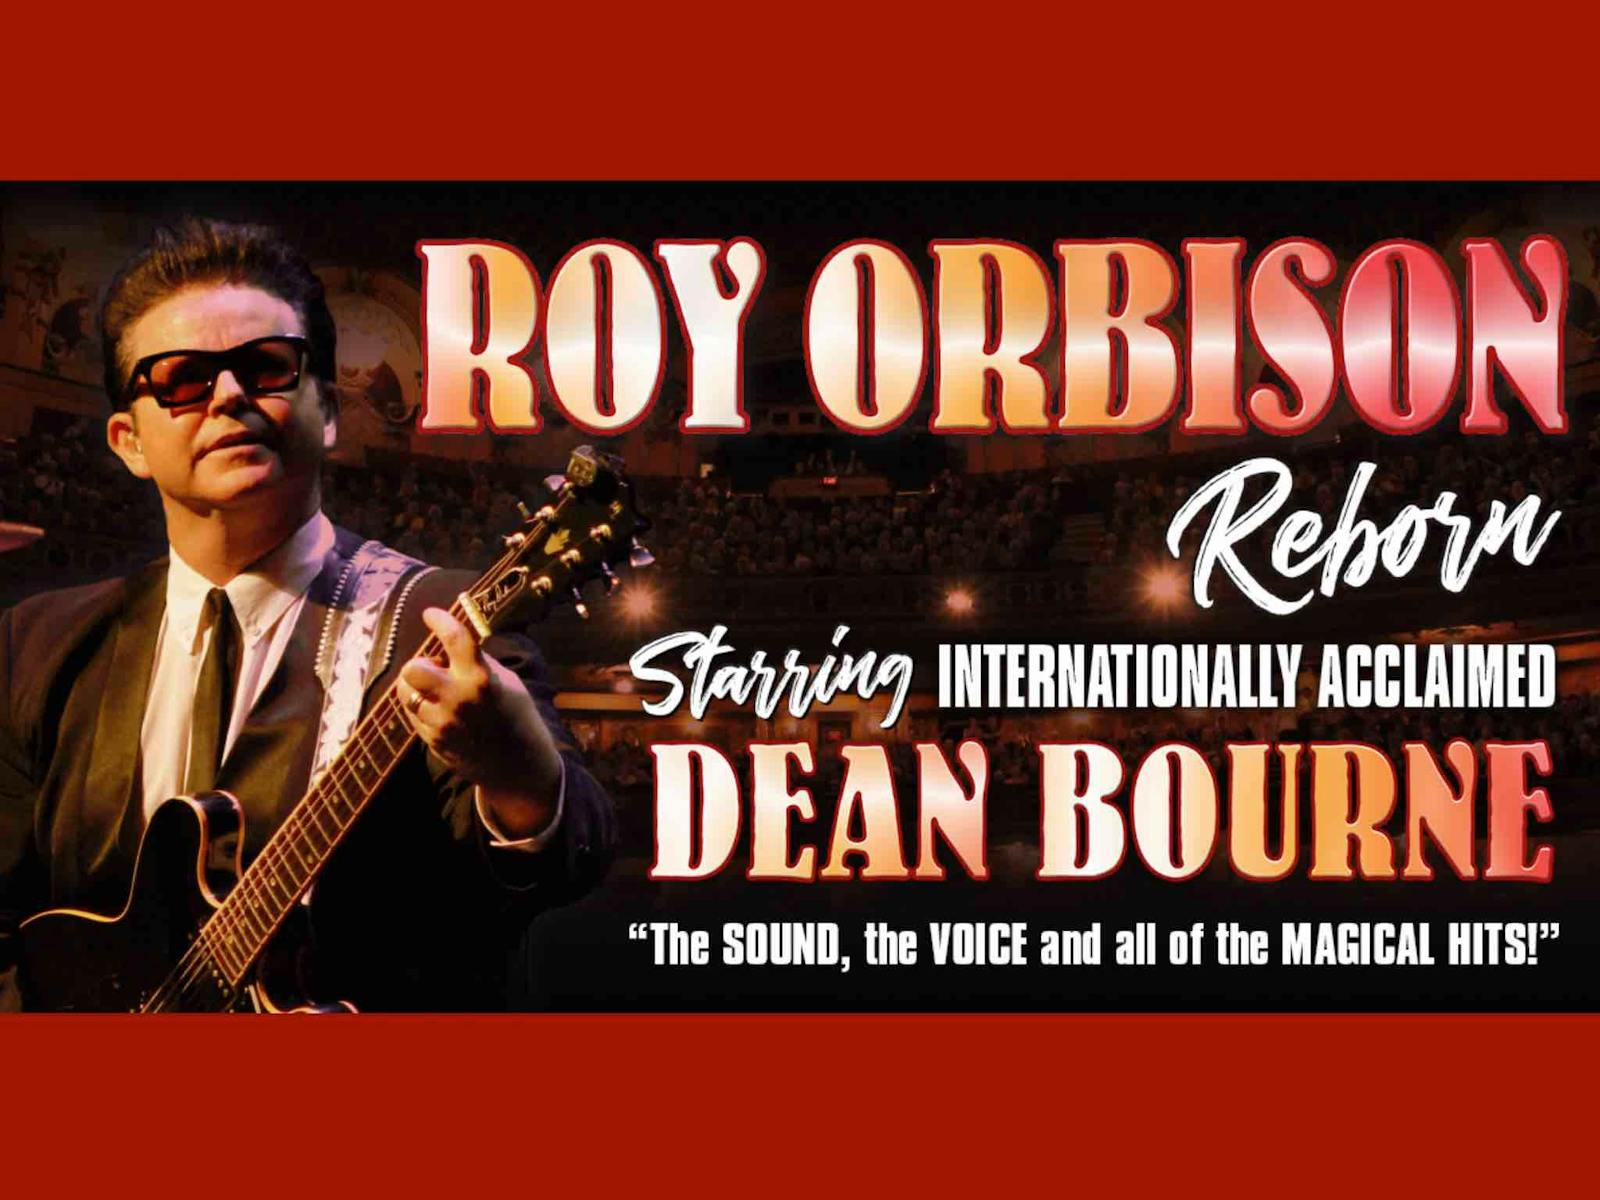 Image for Roy Orbison Reborn starring Dean Bourne at New Lambton